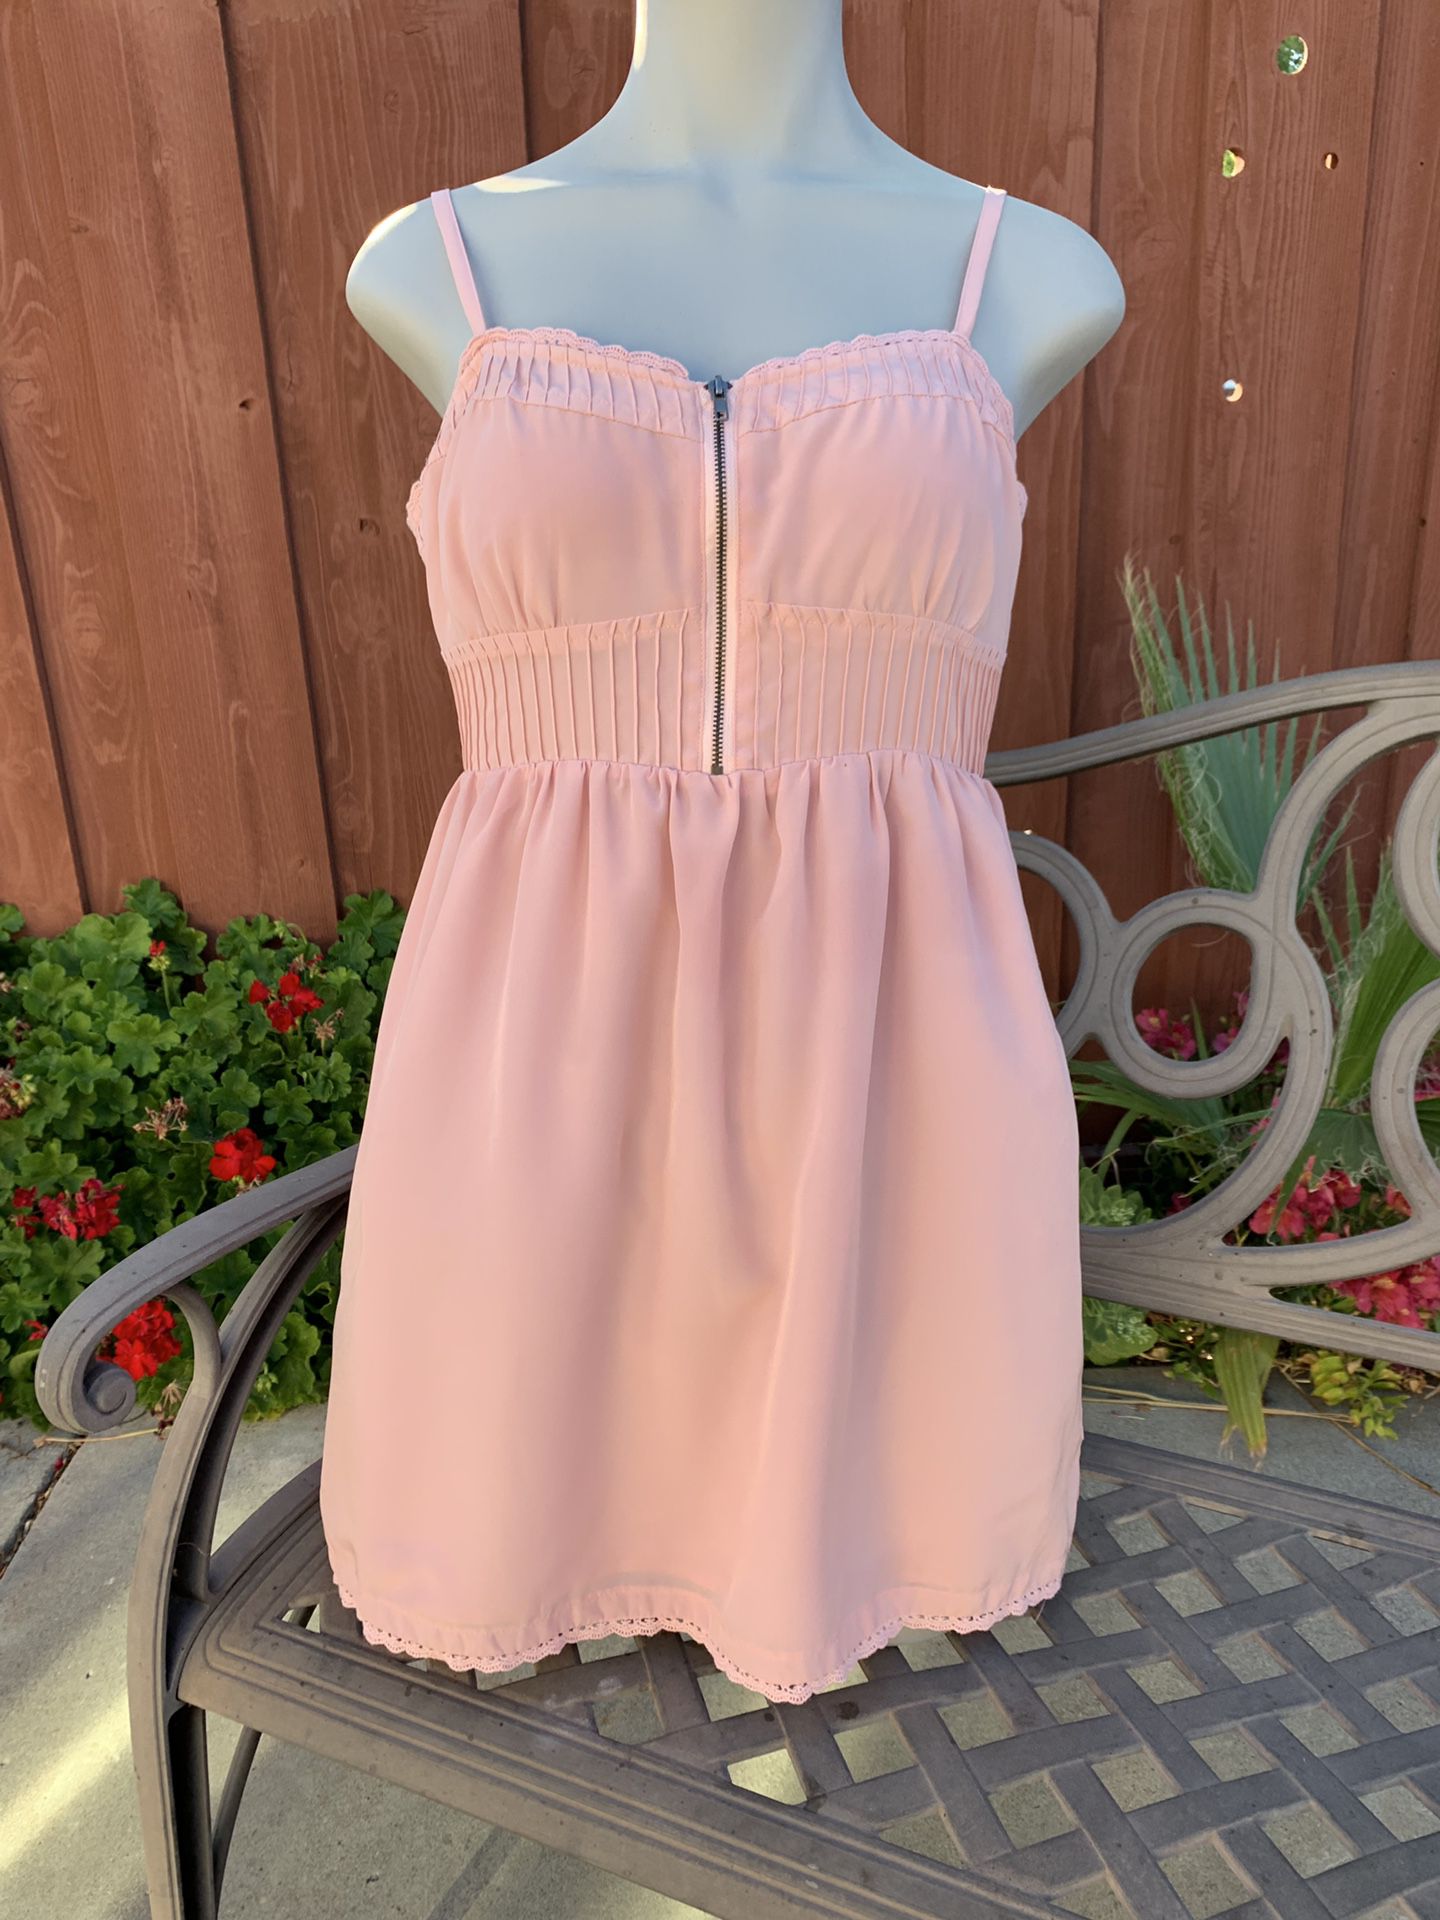 Blush summer dress